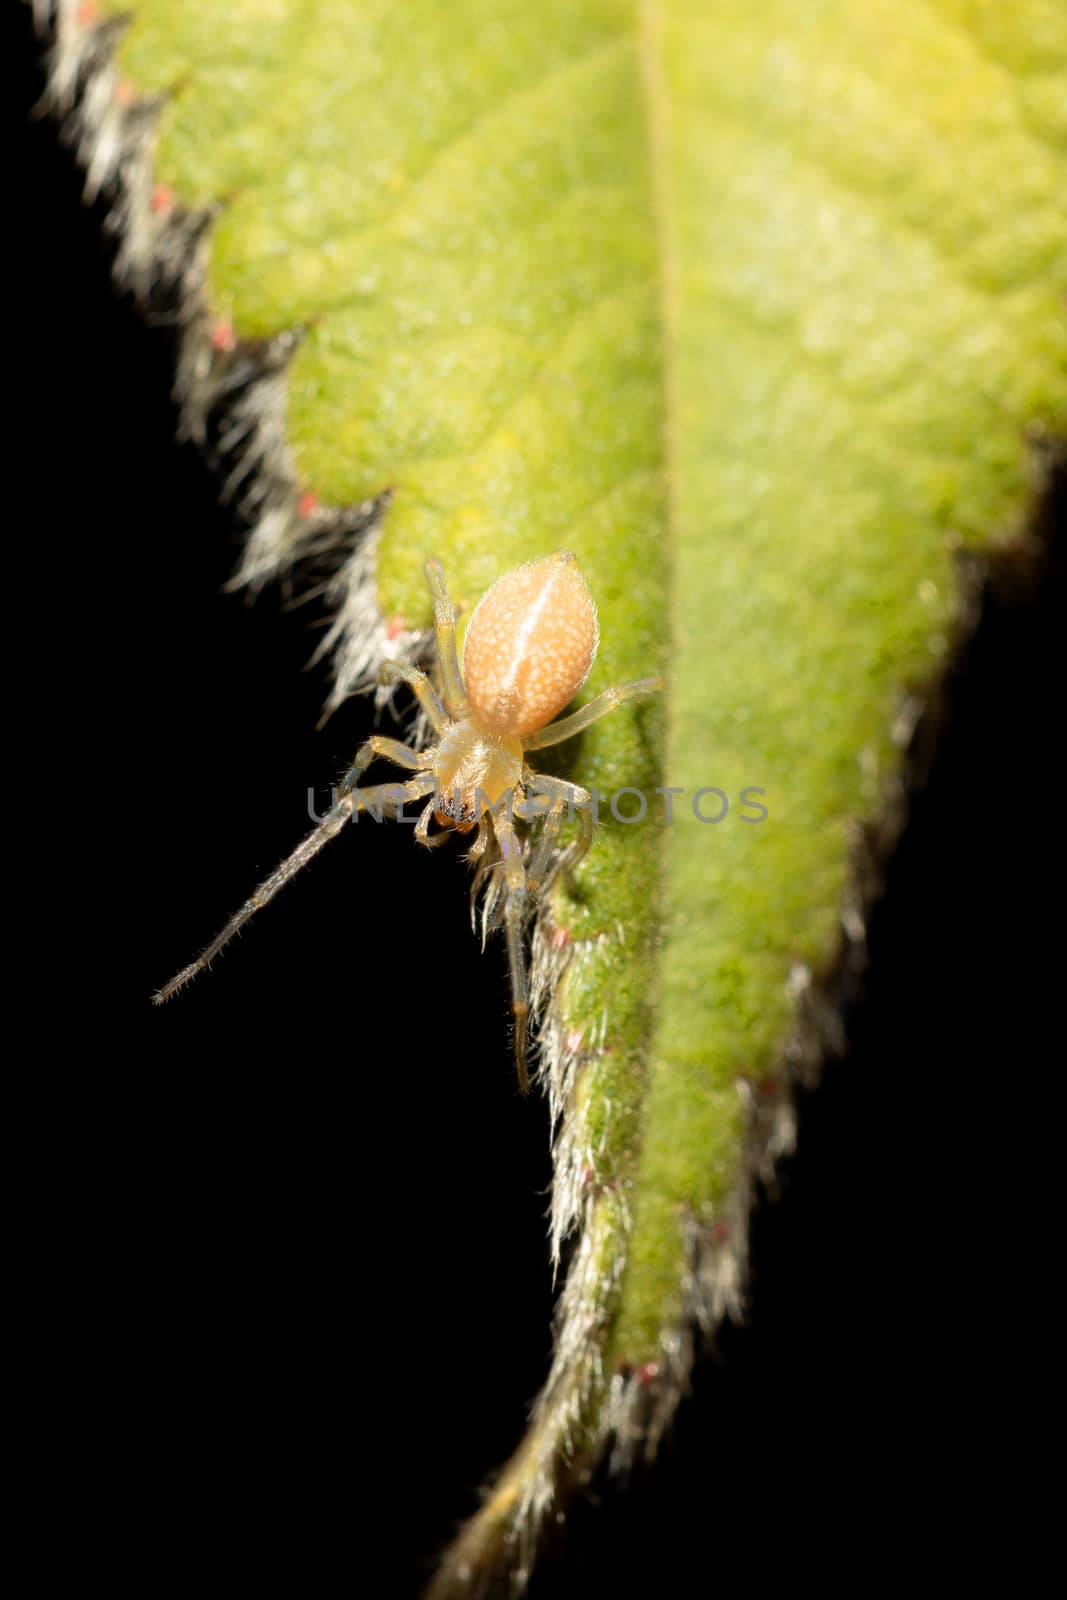 Spider living in 3300 altitude in Simien mountain, Ethiopia, Africa wildlife